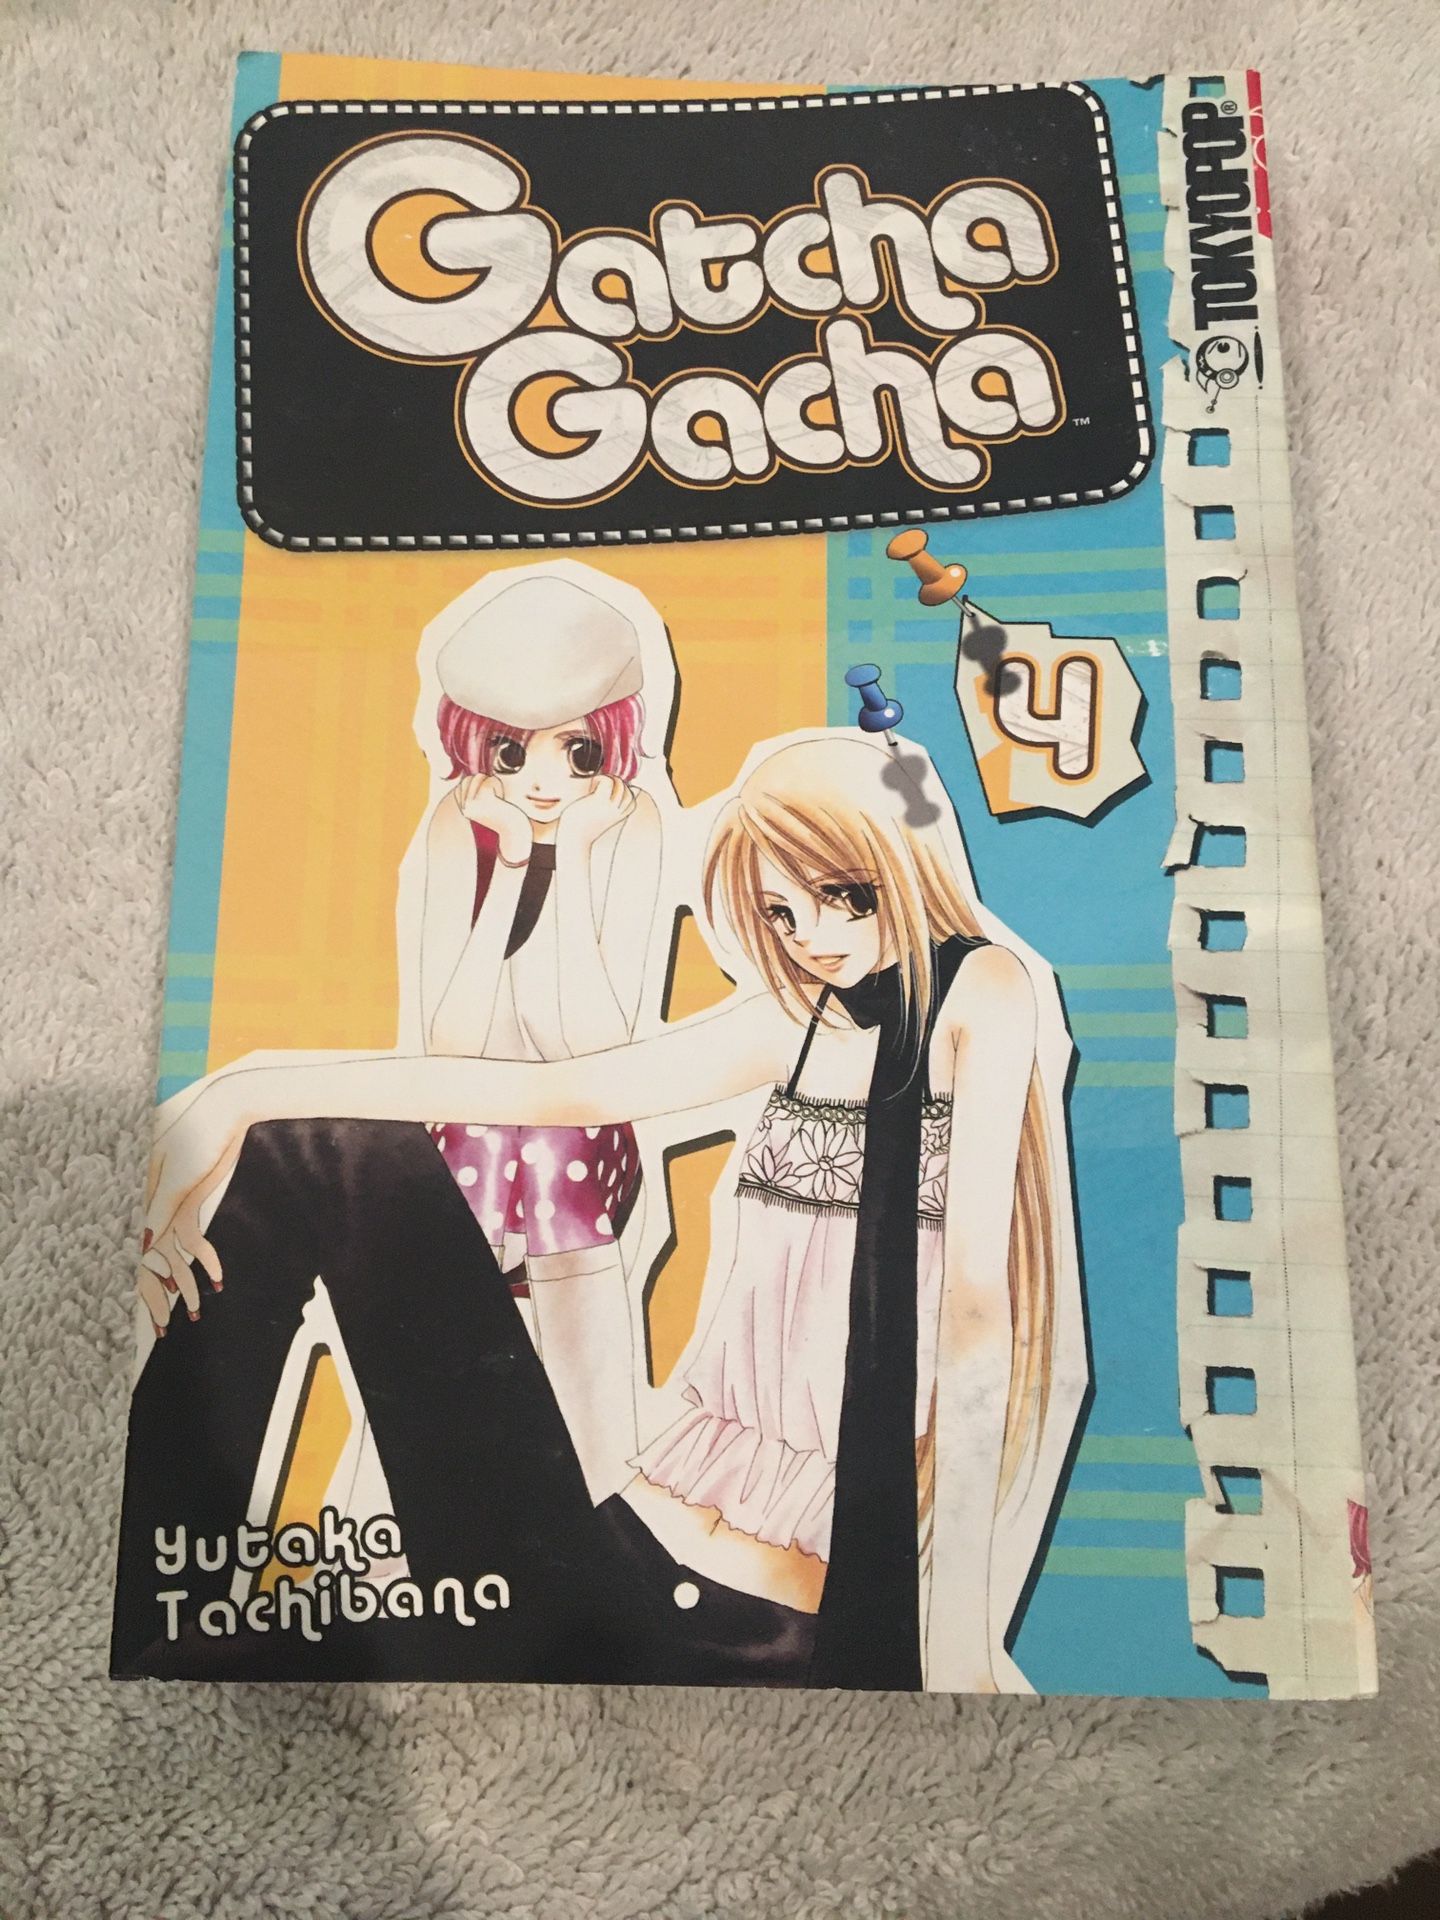 Gatcha Gatcha manga